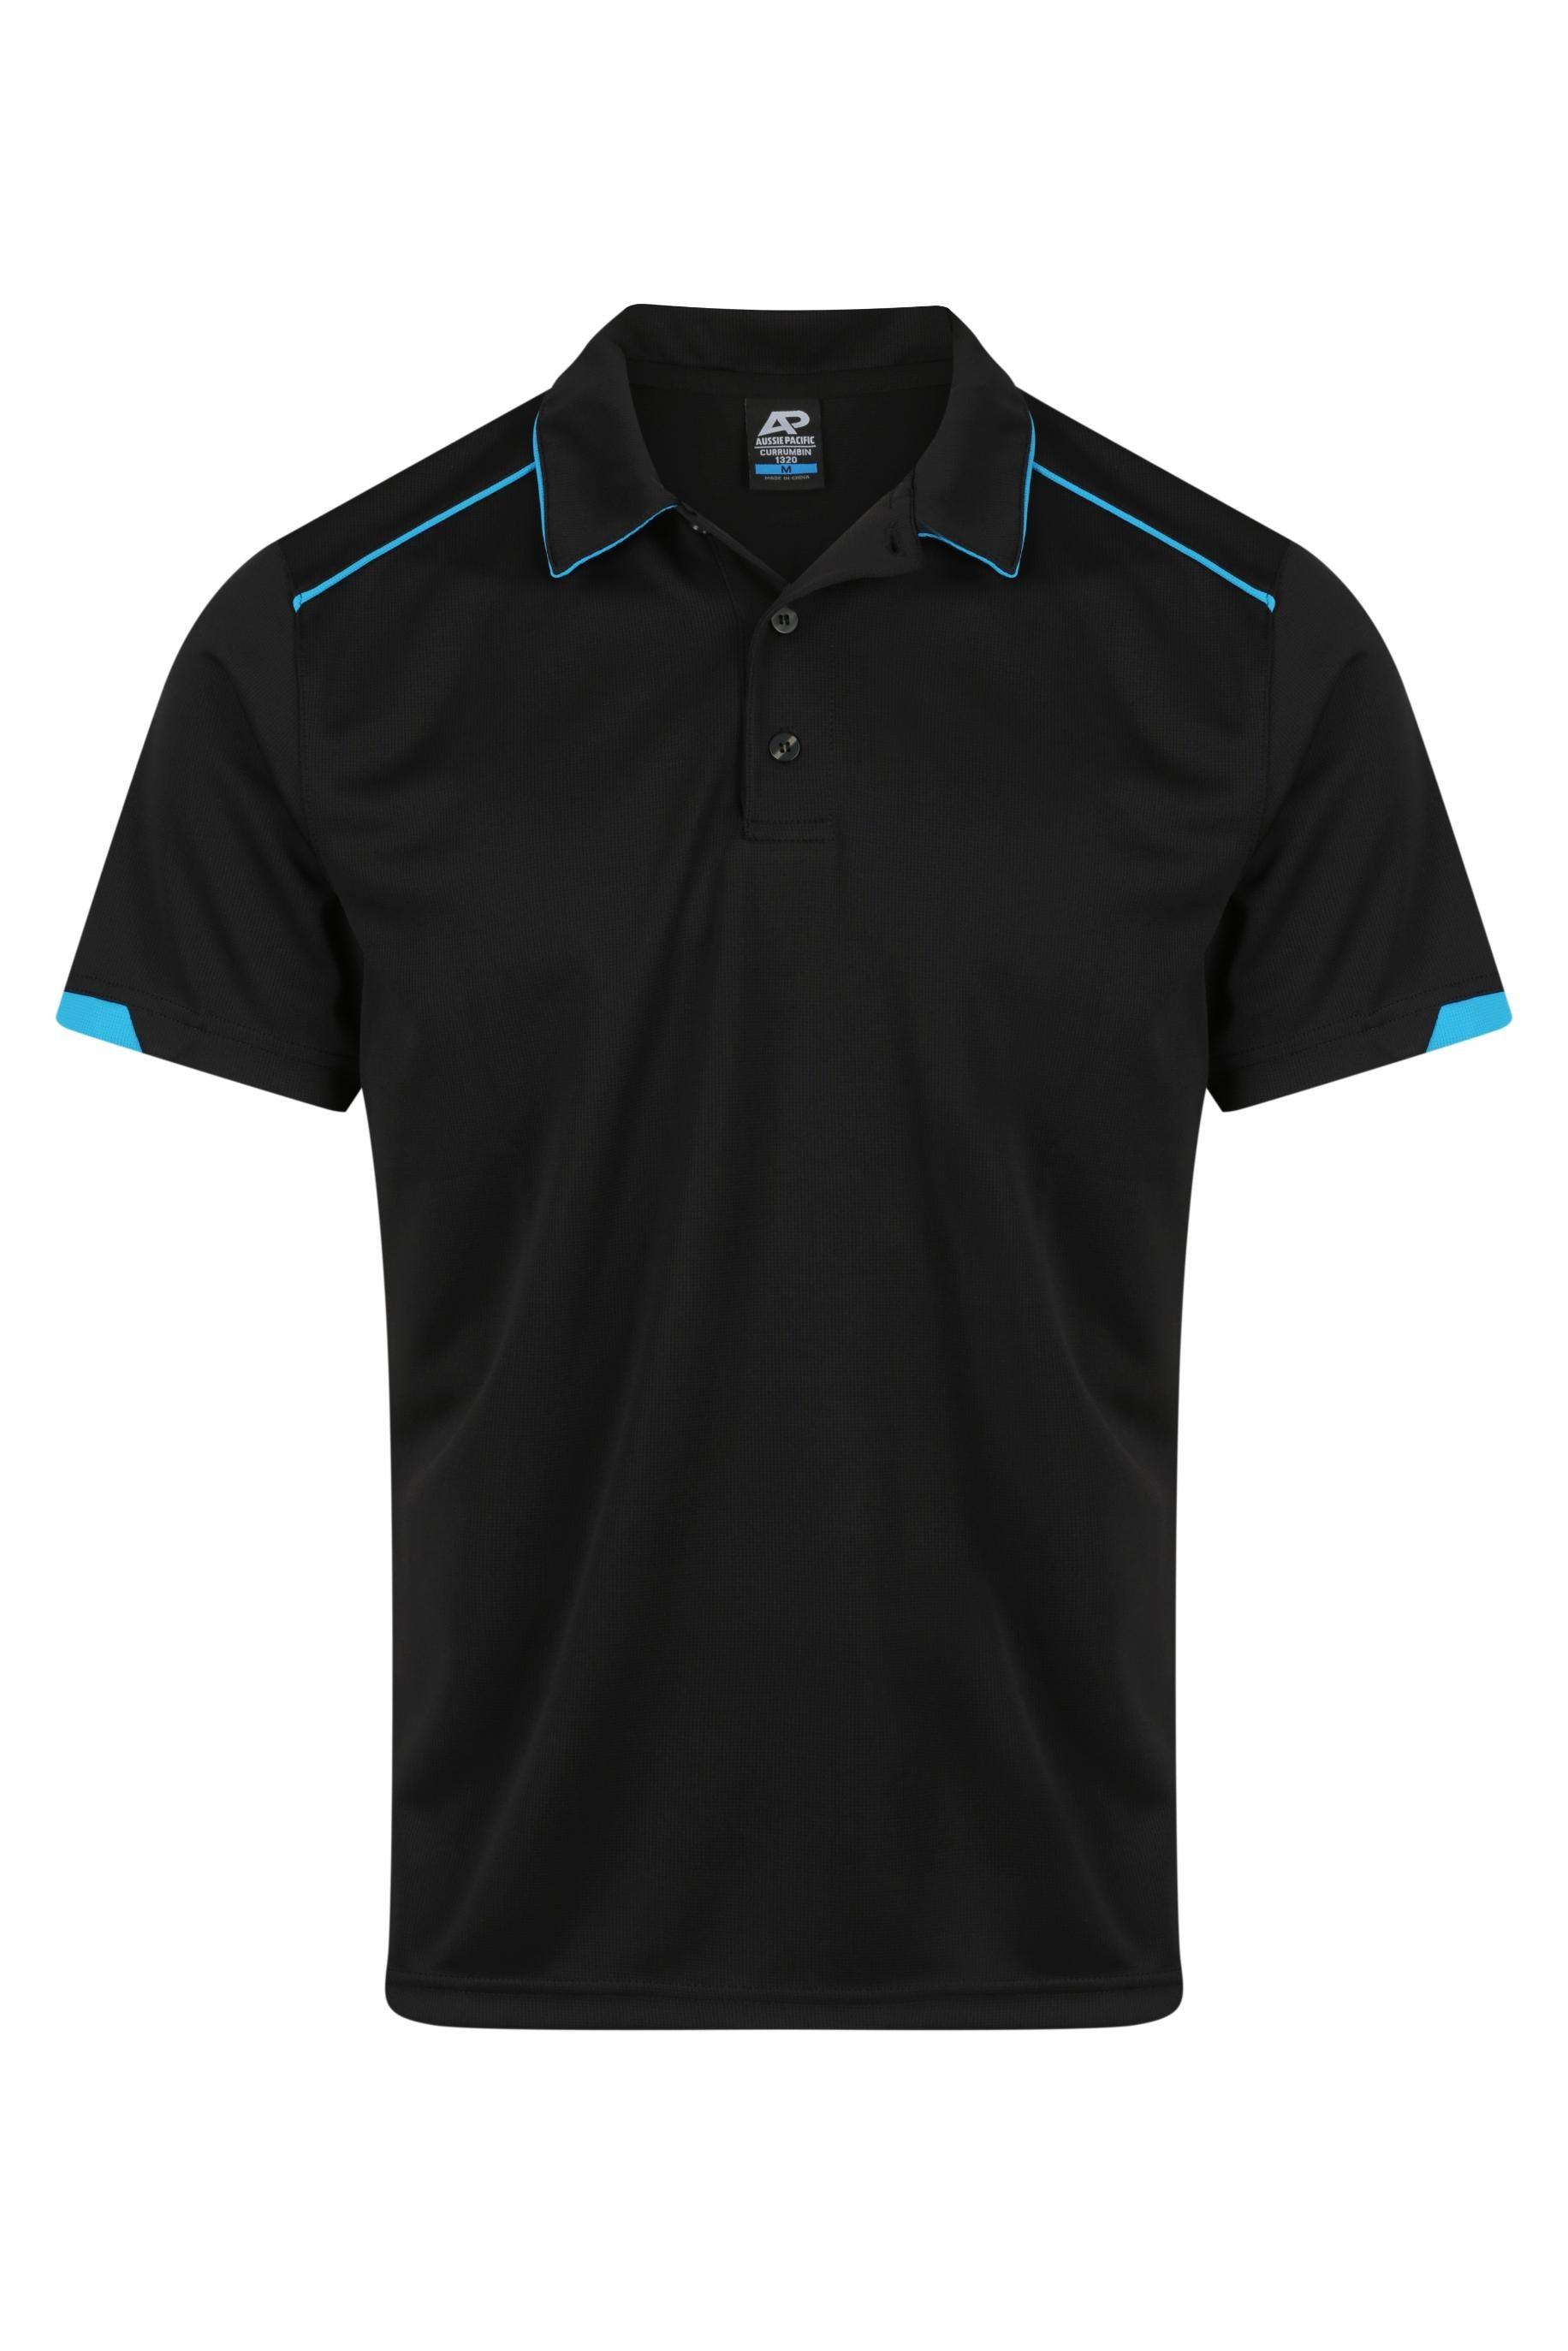 Currumbin Workwear Polo Shirts - Black/Cyan